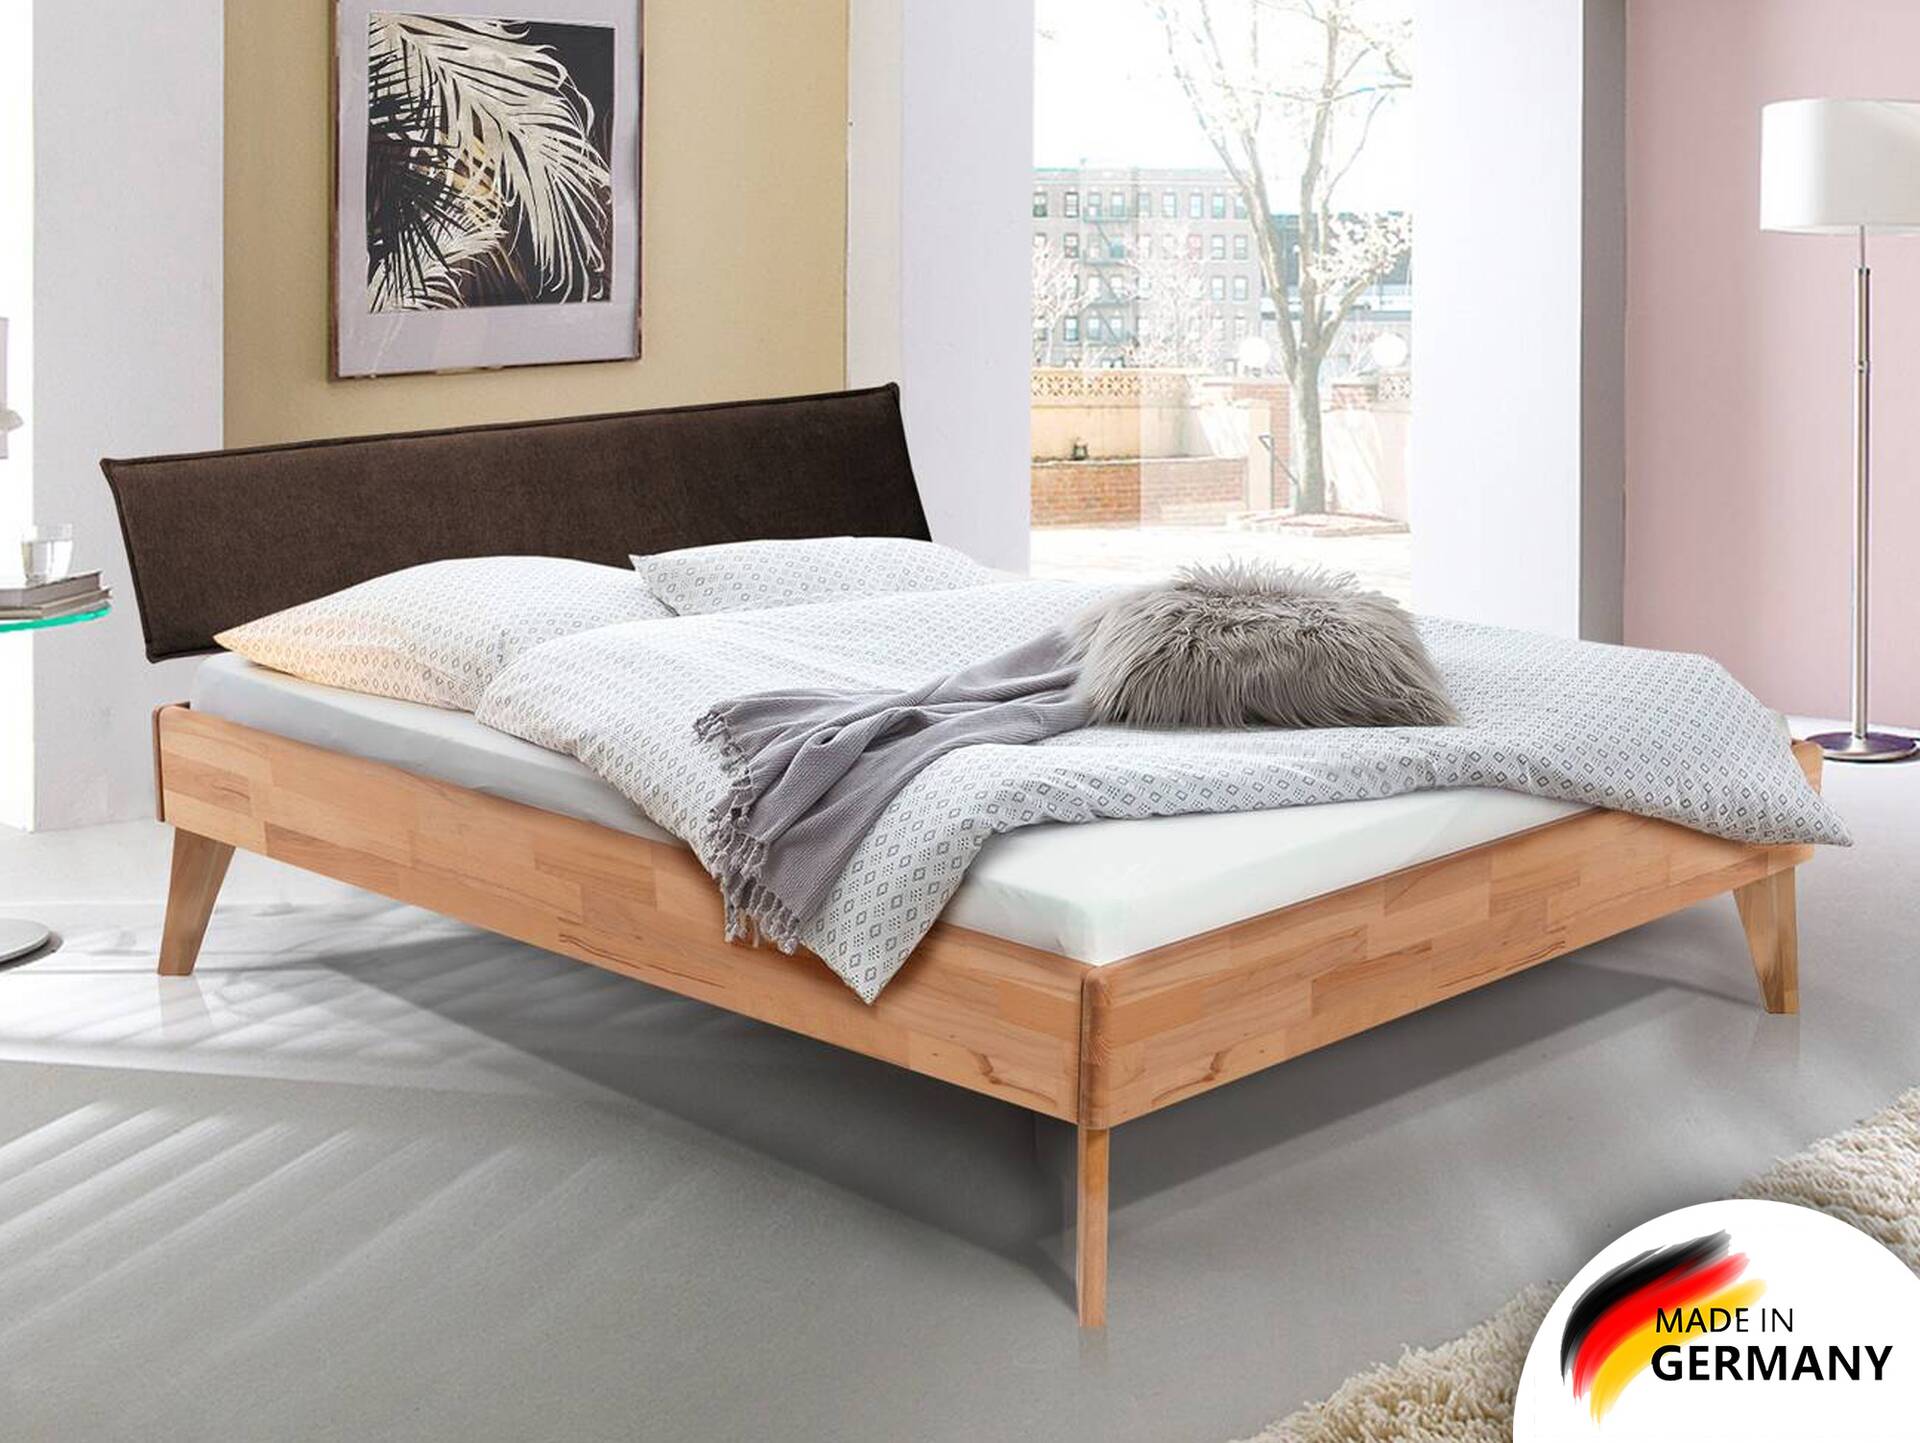 CALIDO 4-Fuß-Bett mit Polster-Kopfteil, Material Massivholz 120 x 220 cm | Eiche geölt | Stoff Anthrazit | Standardhöhe